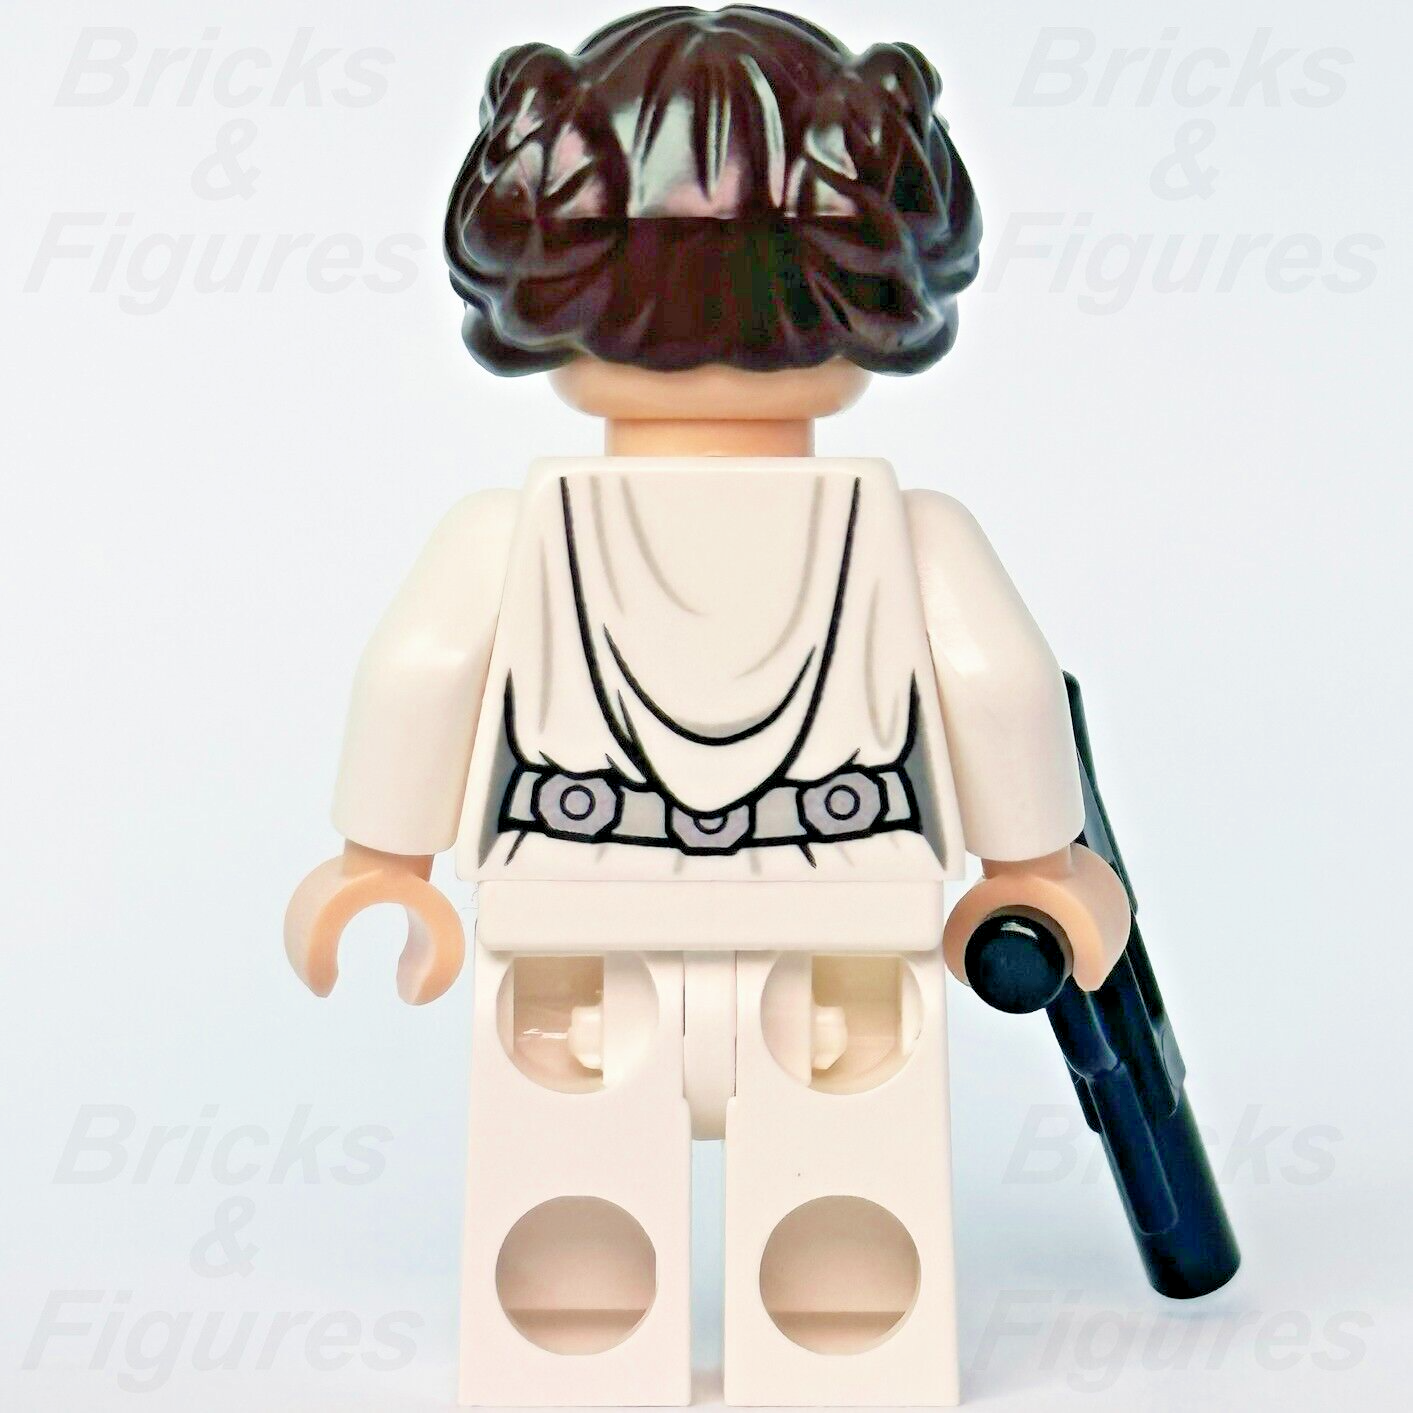 LEGO Star Wars Princess Leia Minifigure White Dress Belt Outfit 75159 sw0779